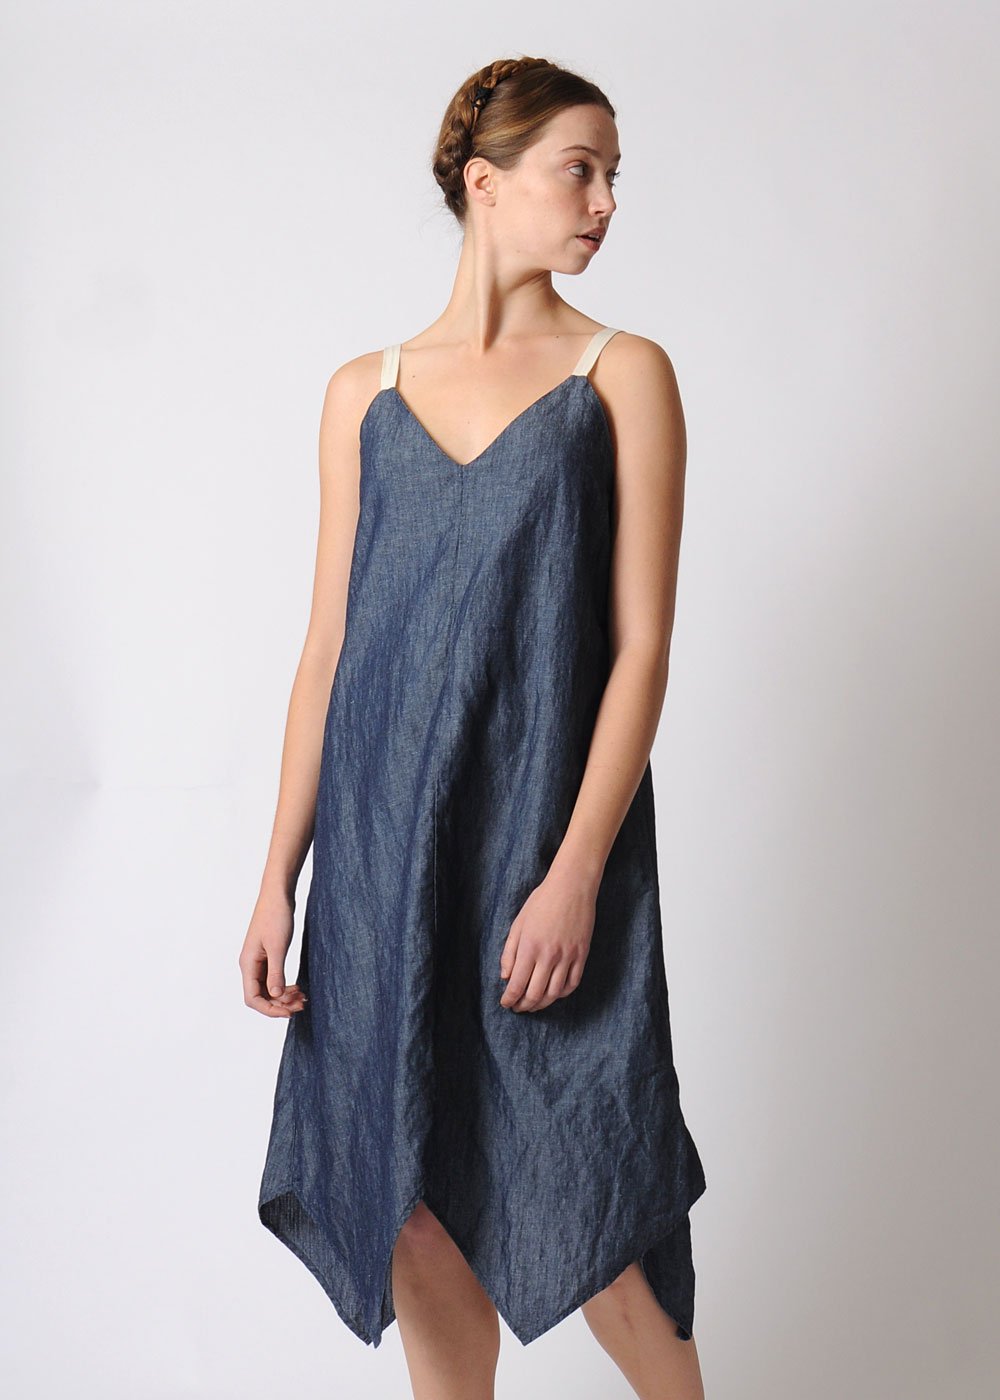 conifer_denim_handkerchief_dress.jpg